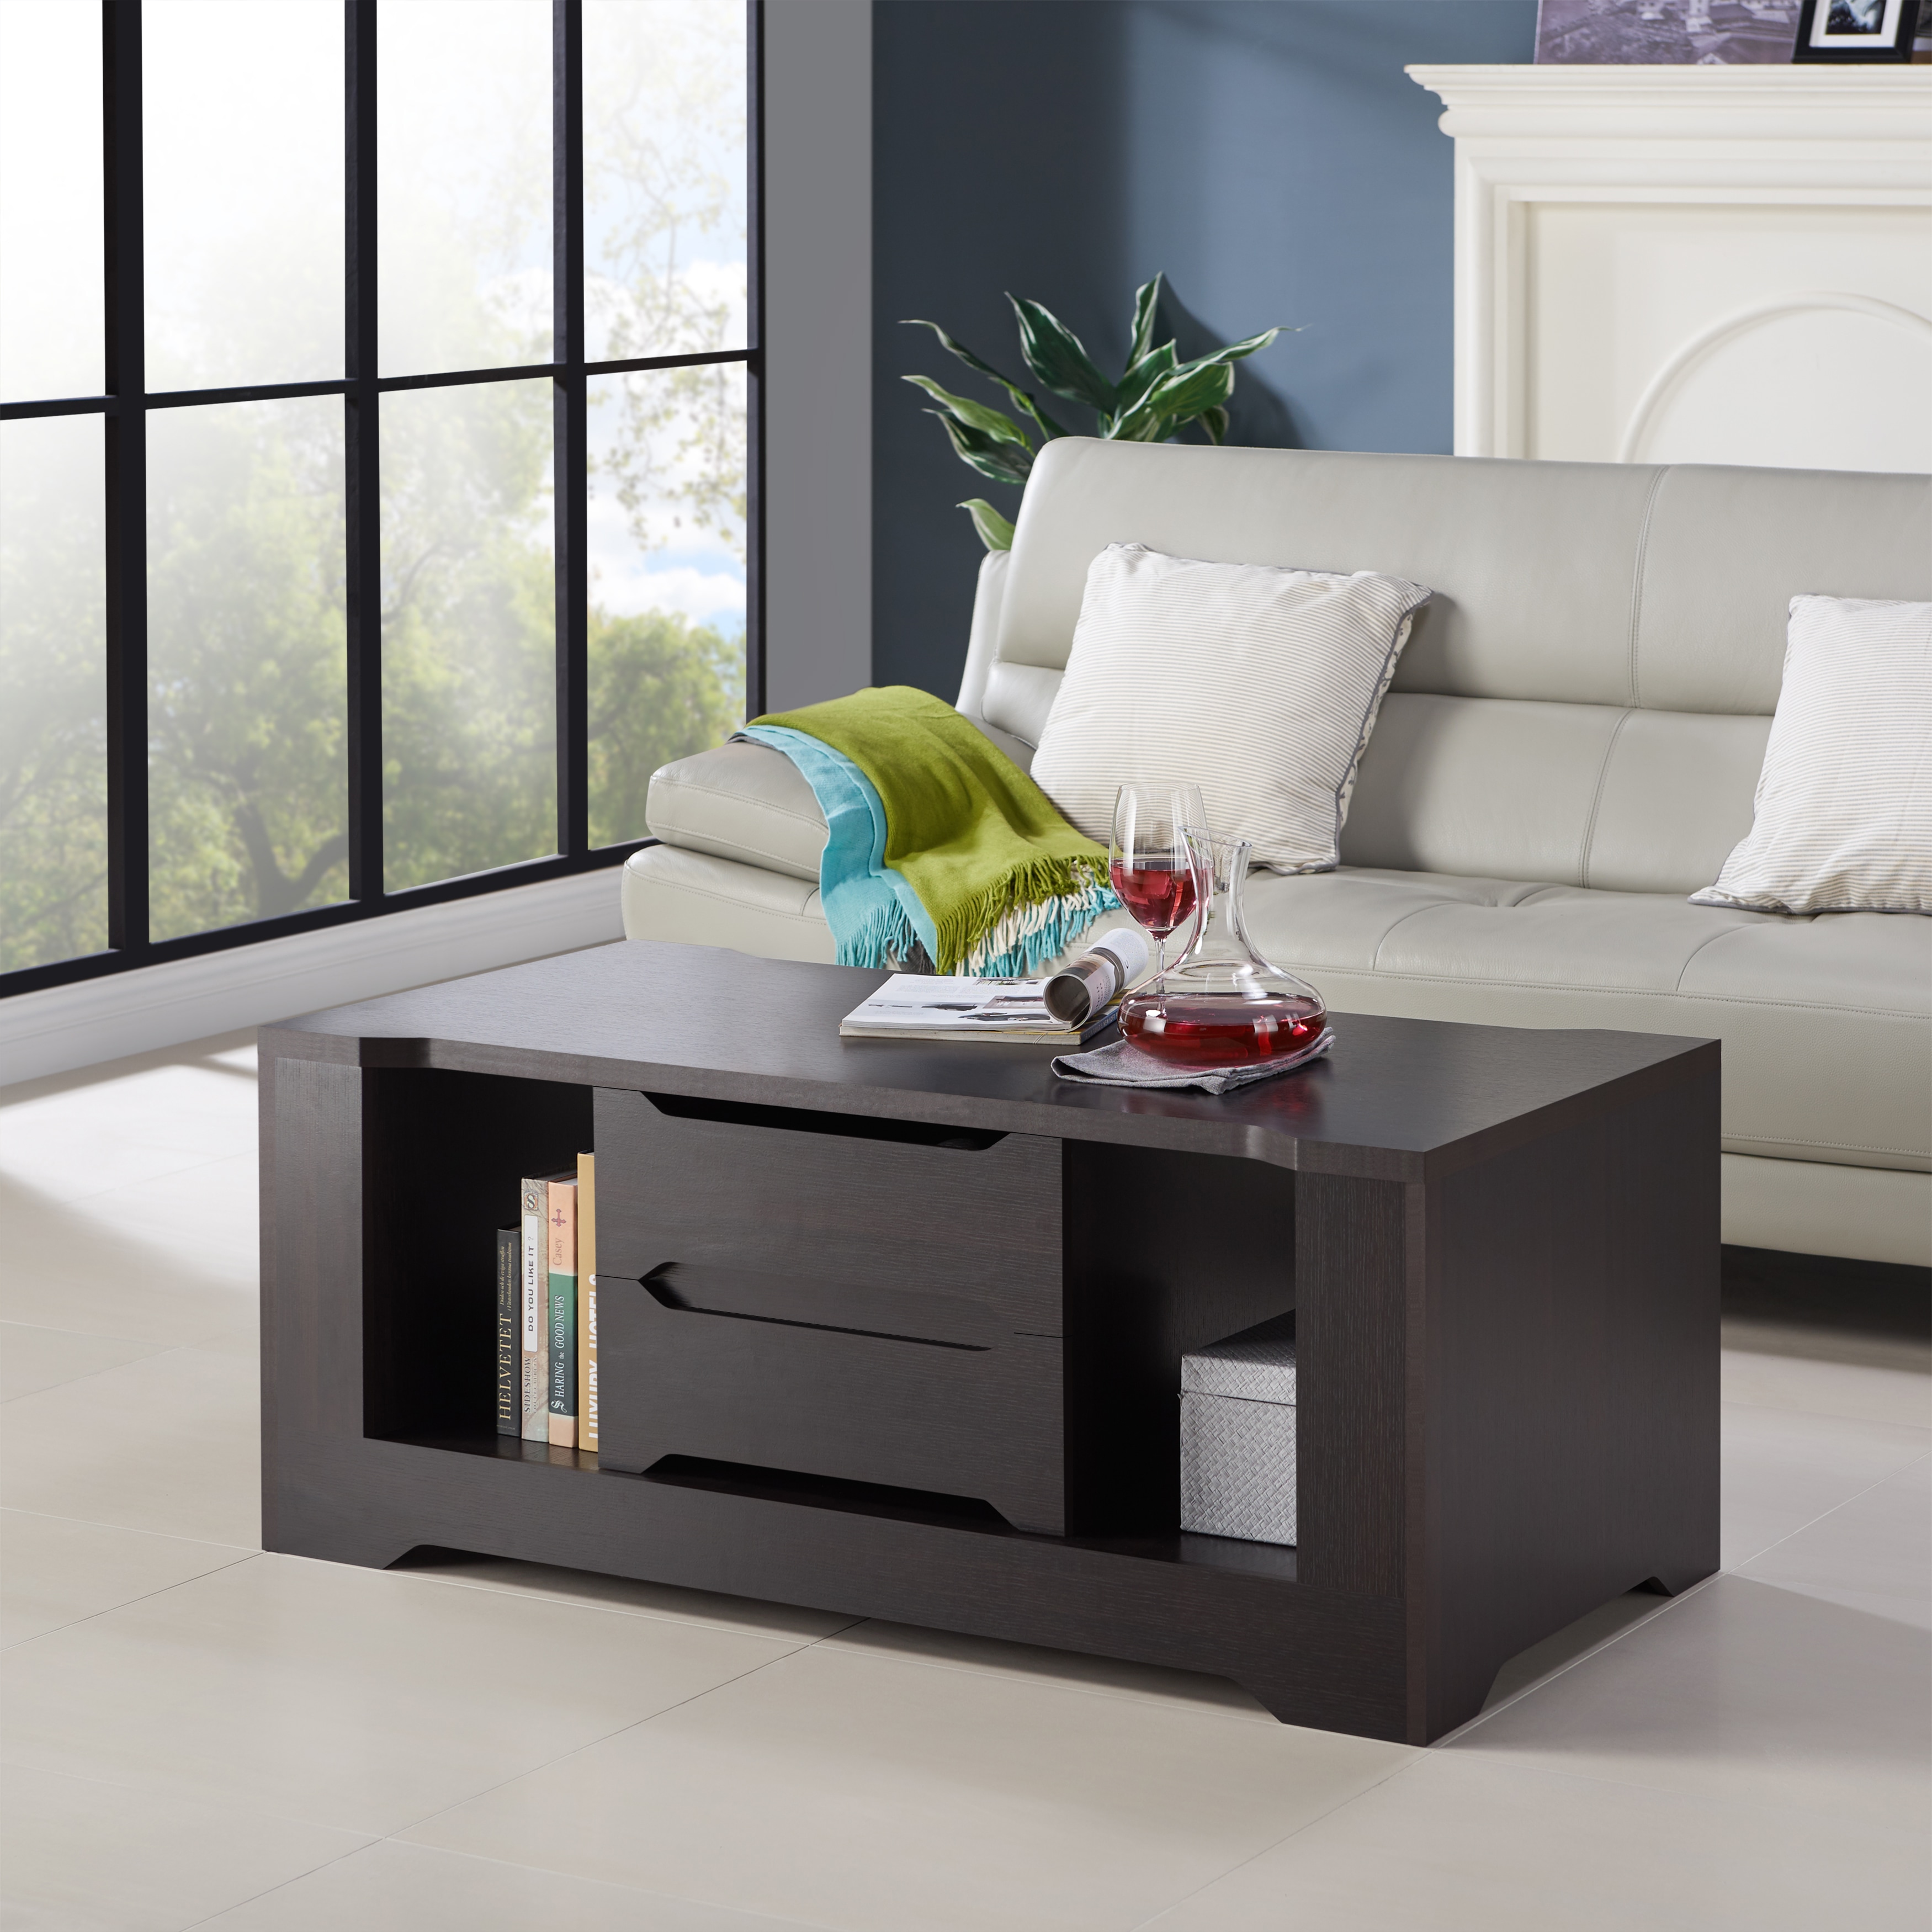 Shop Furniture Of America Halin Modern Espresso 2 Drawer Coffee Table Overstock 14292588